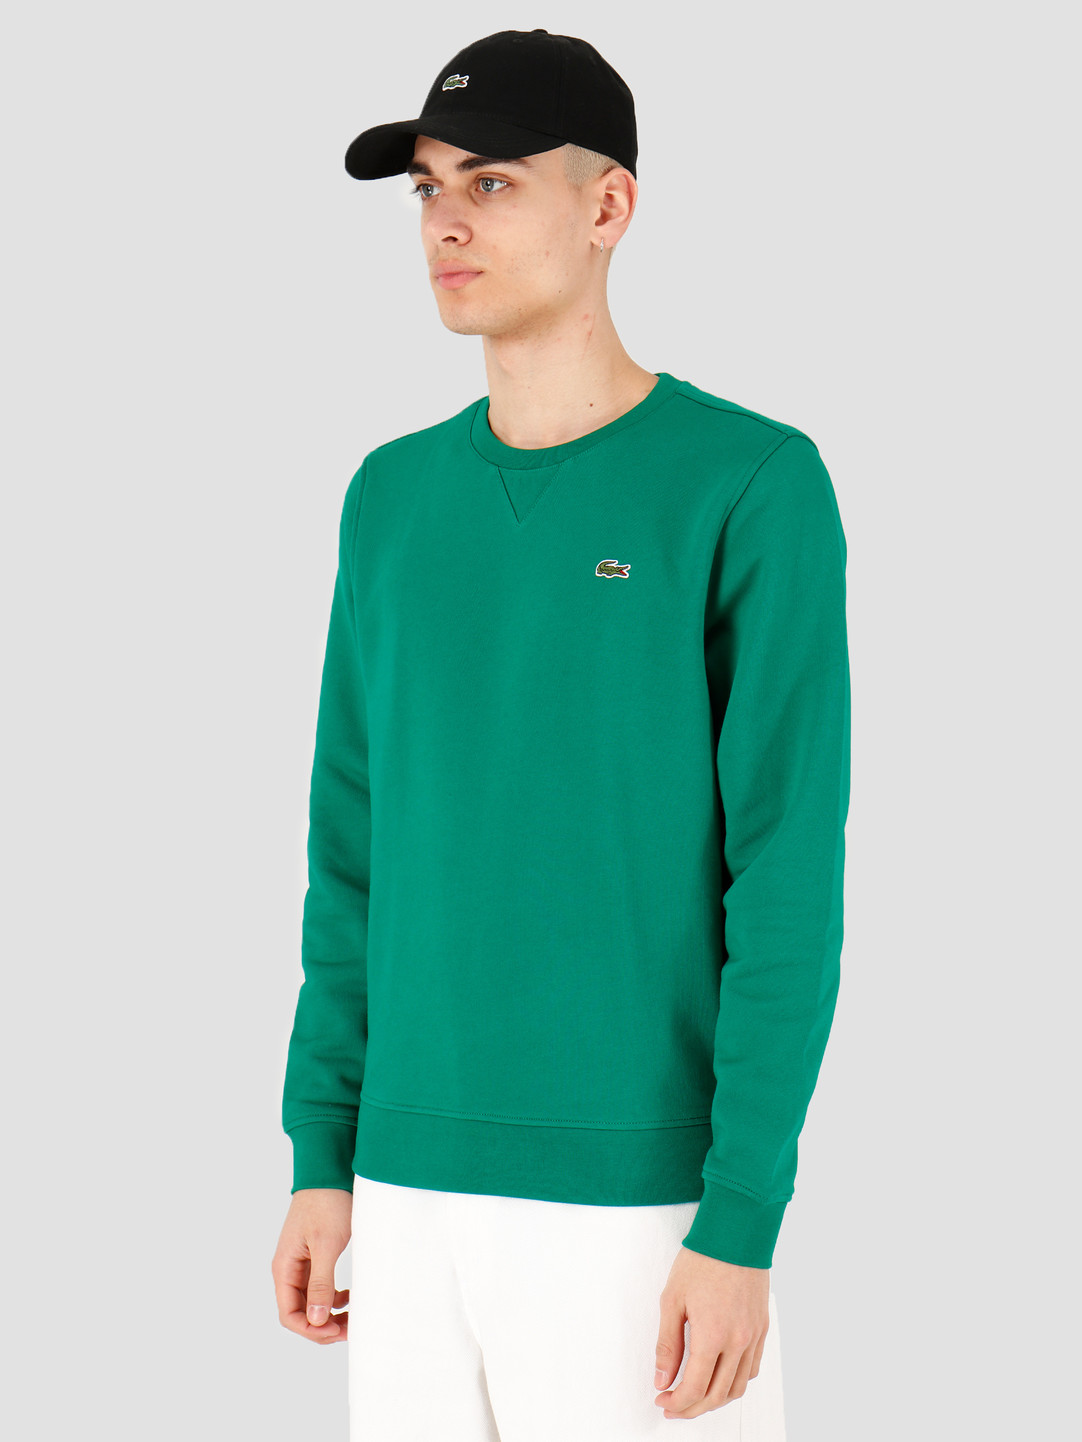 green lacoste hoodie